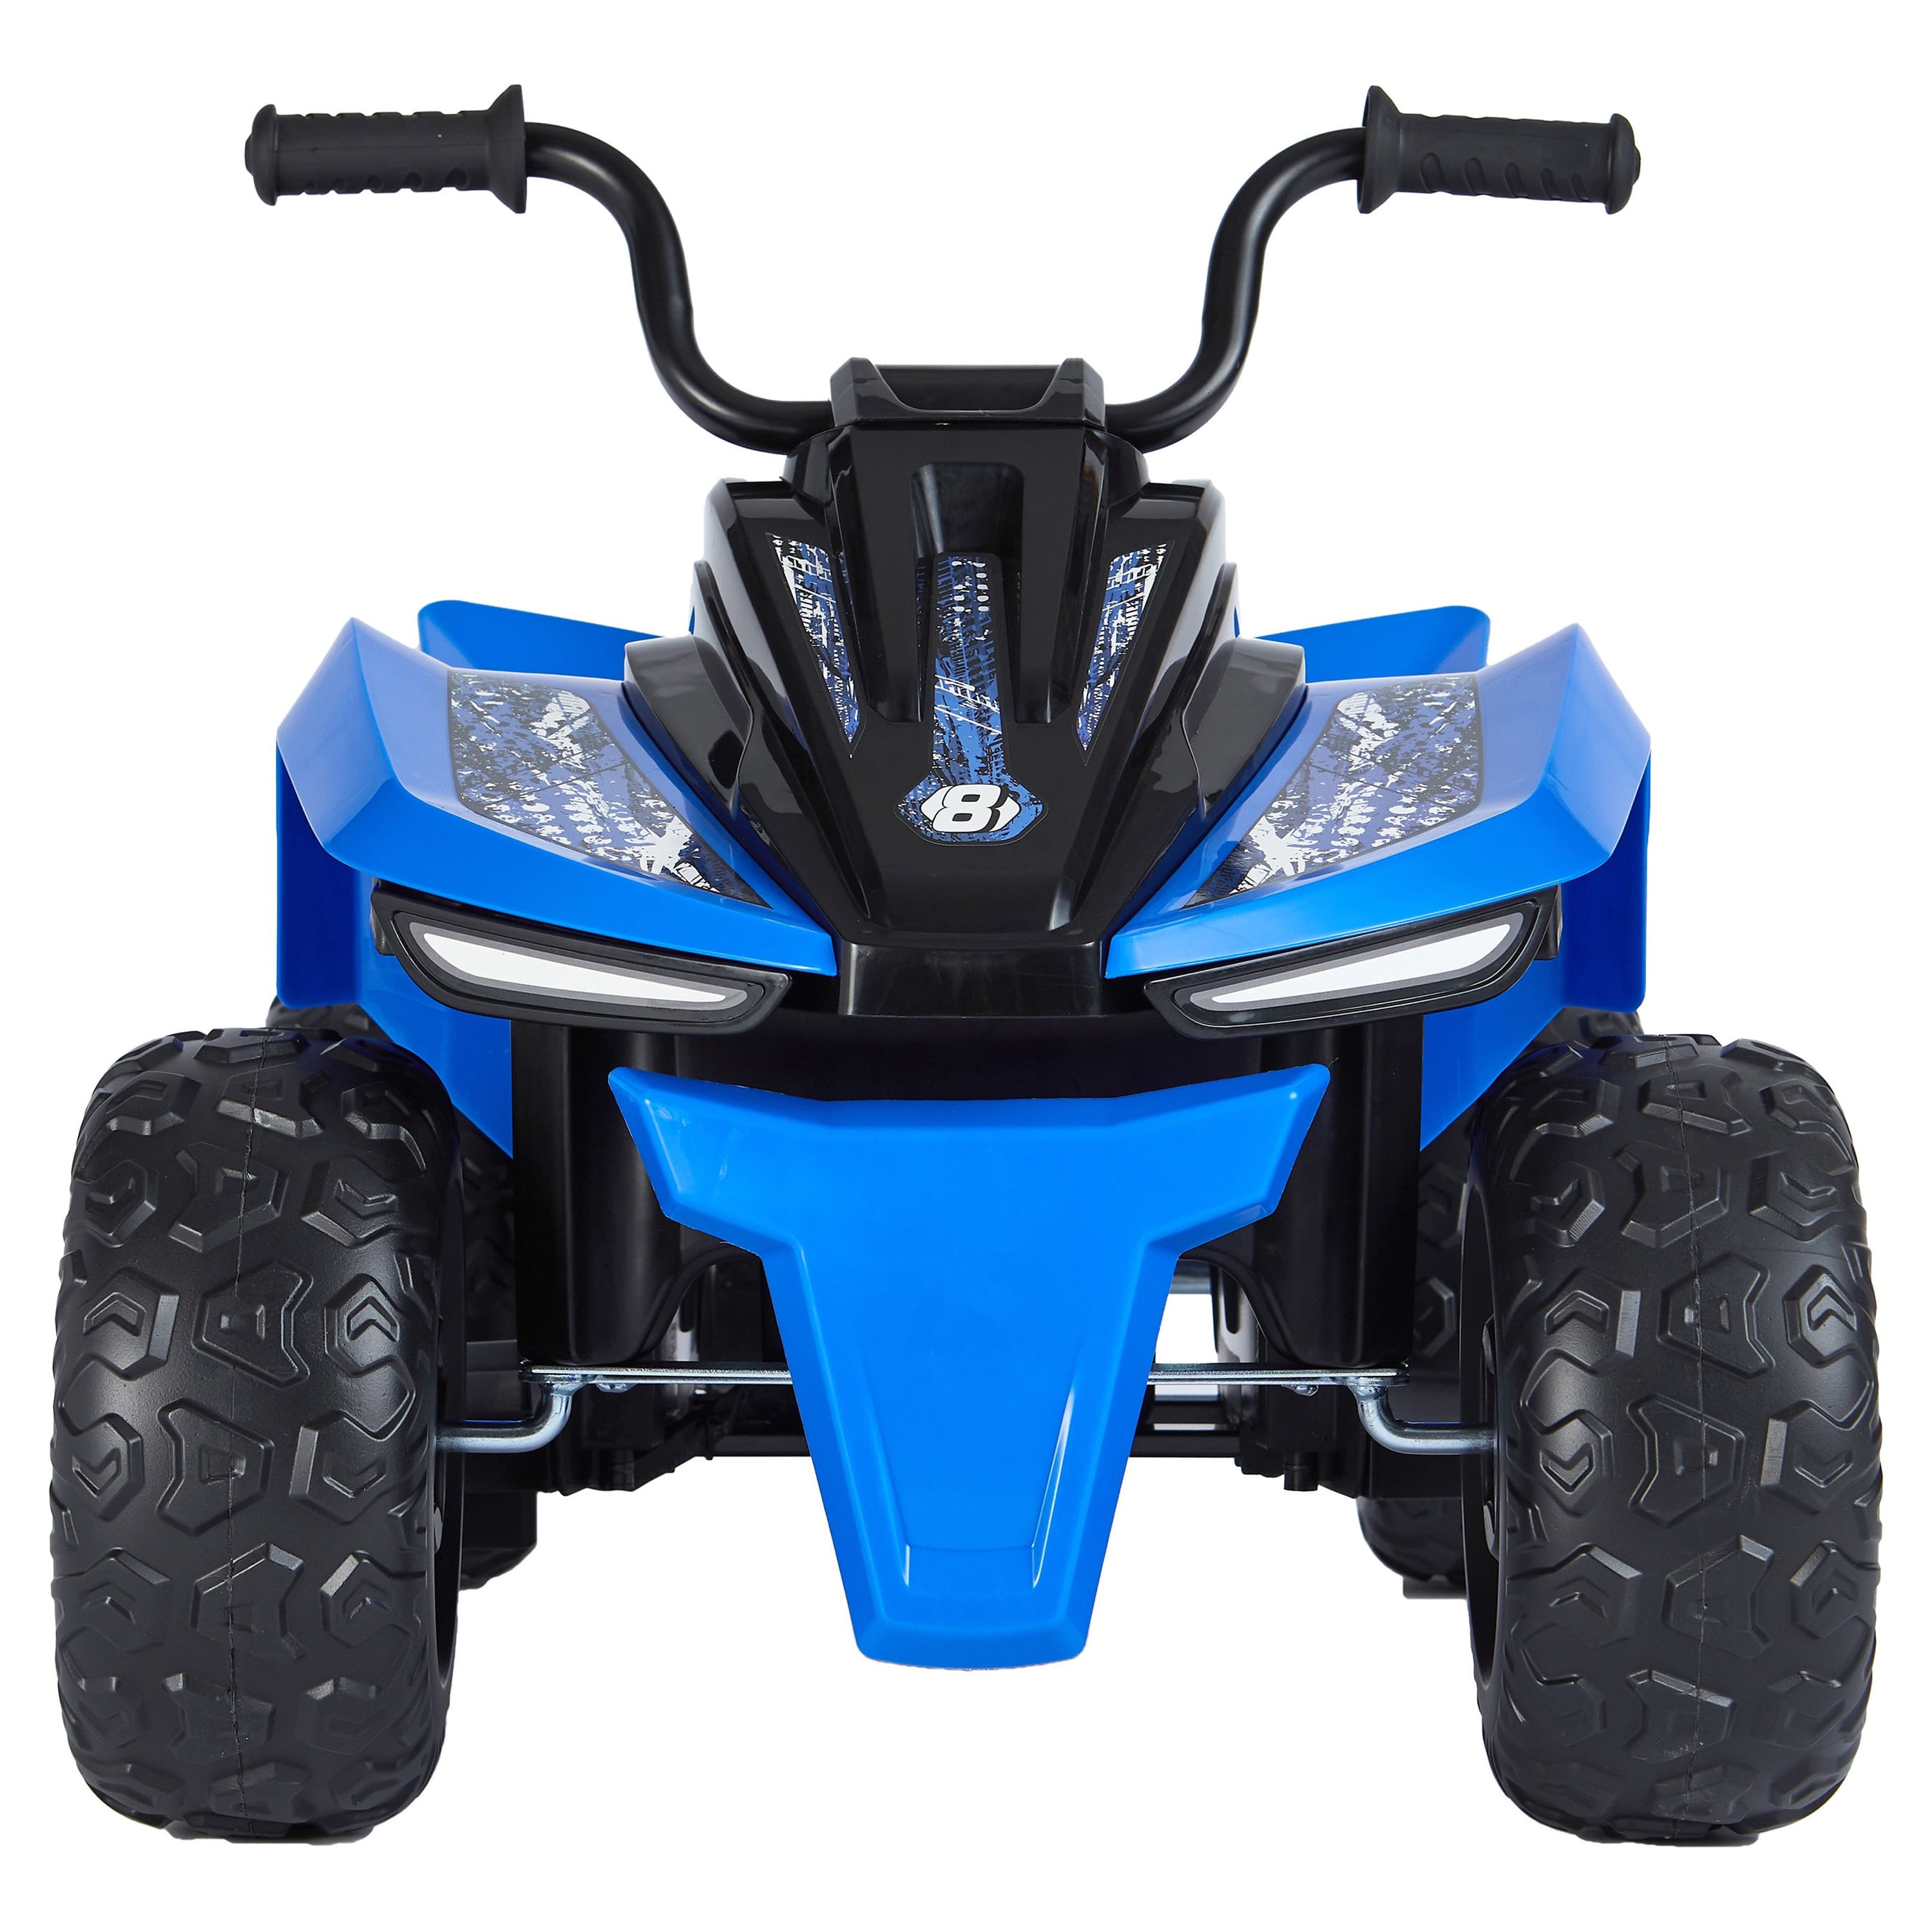 Kalee 6 Volt Trail Racer Blue ATV Battery Powered Ride-on - image 3 of 7